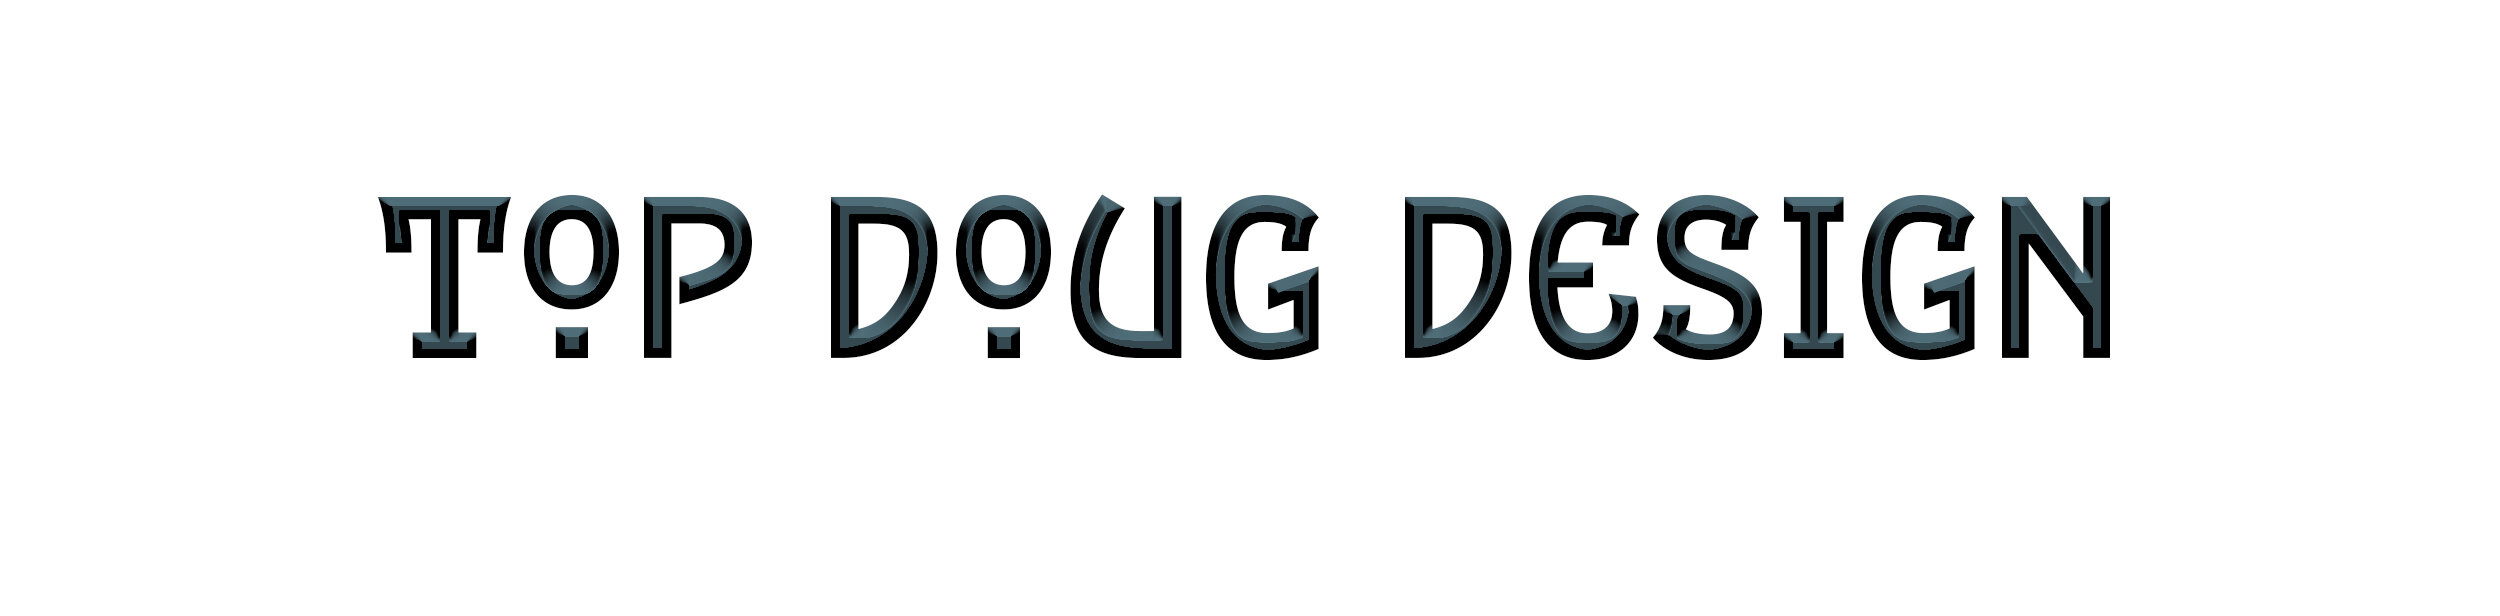 Top Doug Design